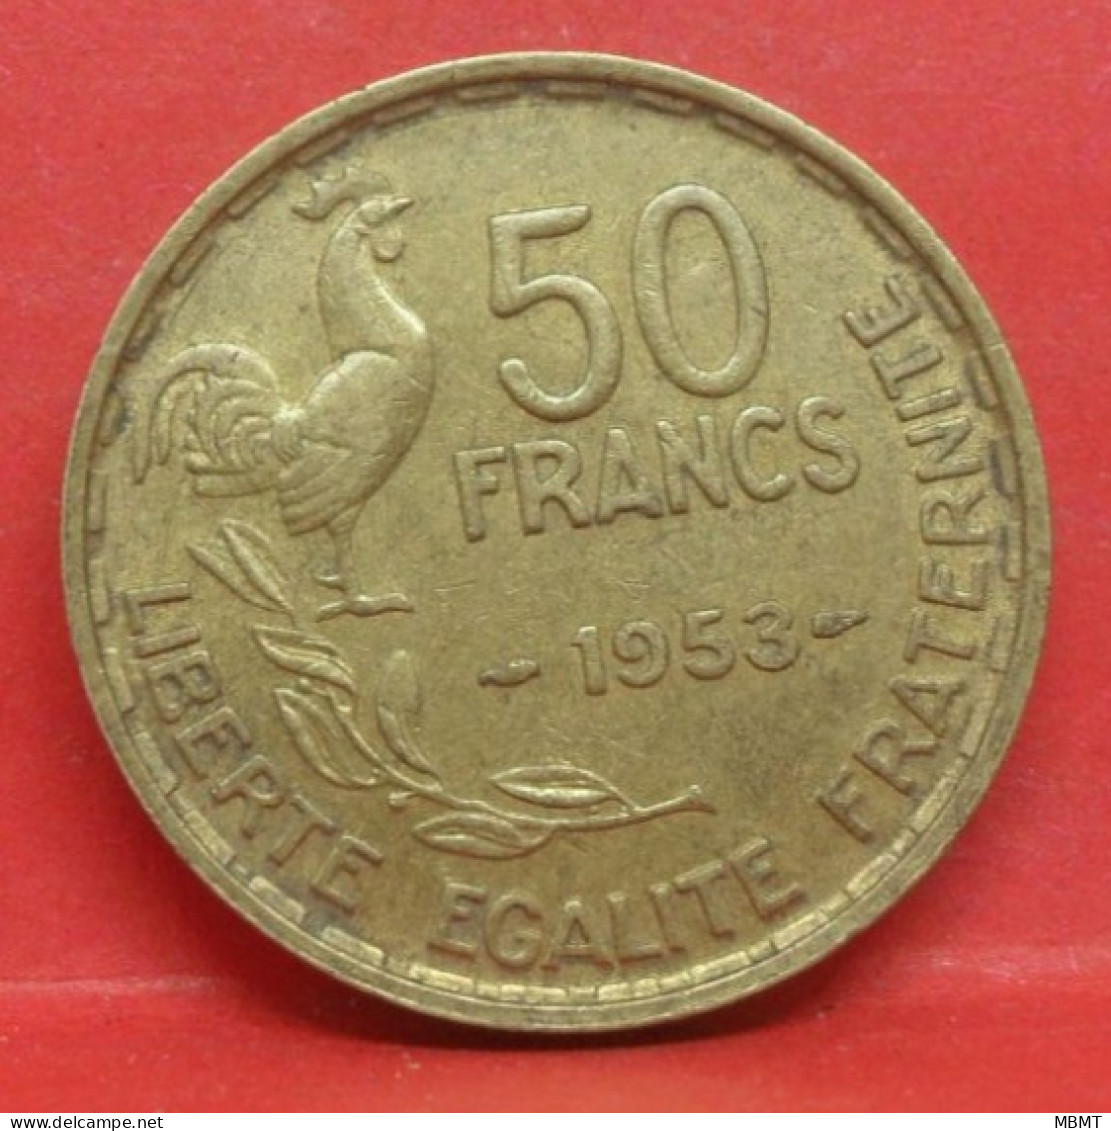 50 Francs Guiraud 1953 - TTB - Pièce Monnaie France - Article N°1010 - 50 Francs